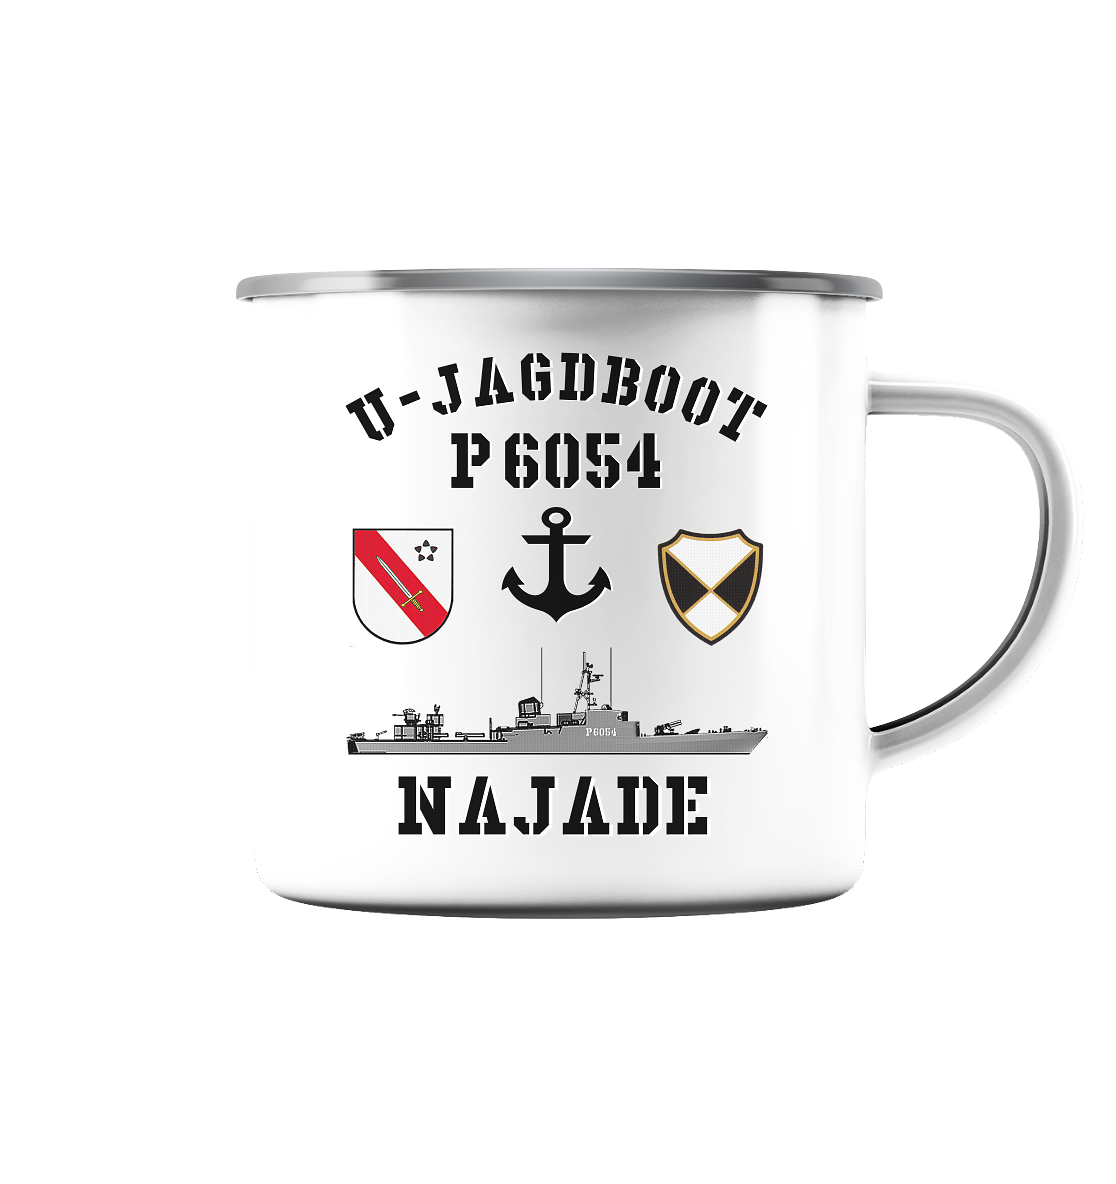 U-Jagdboot P6054 NAJADE Anker - Emaille Tasse (Silber)